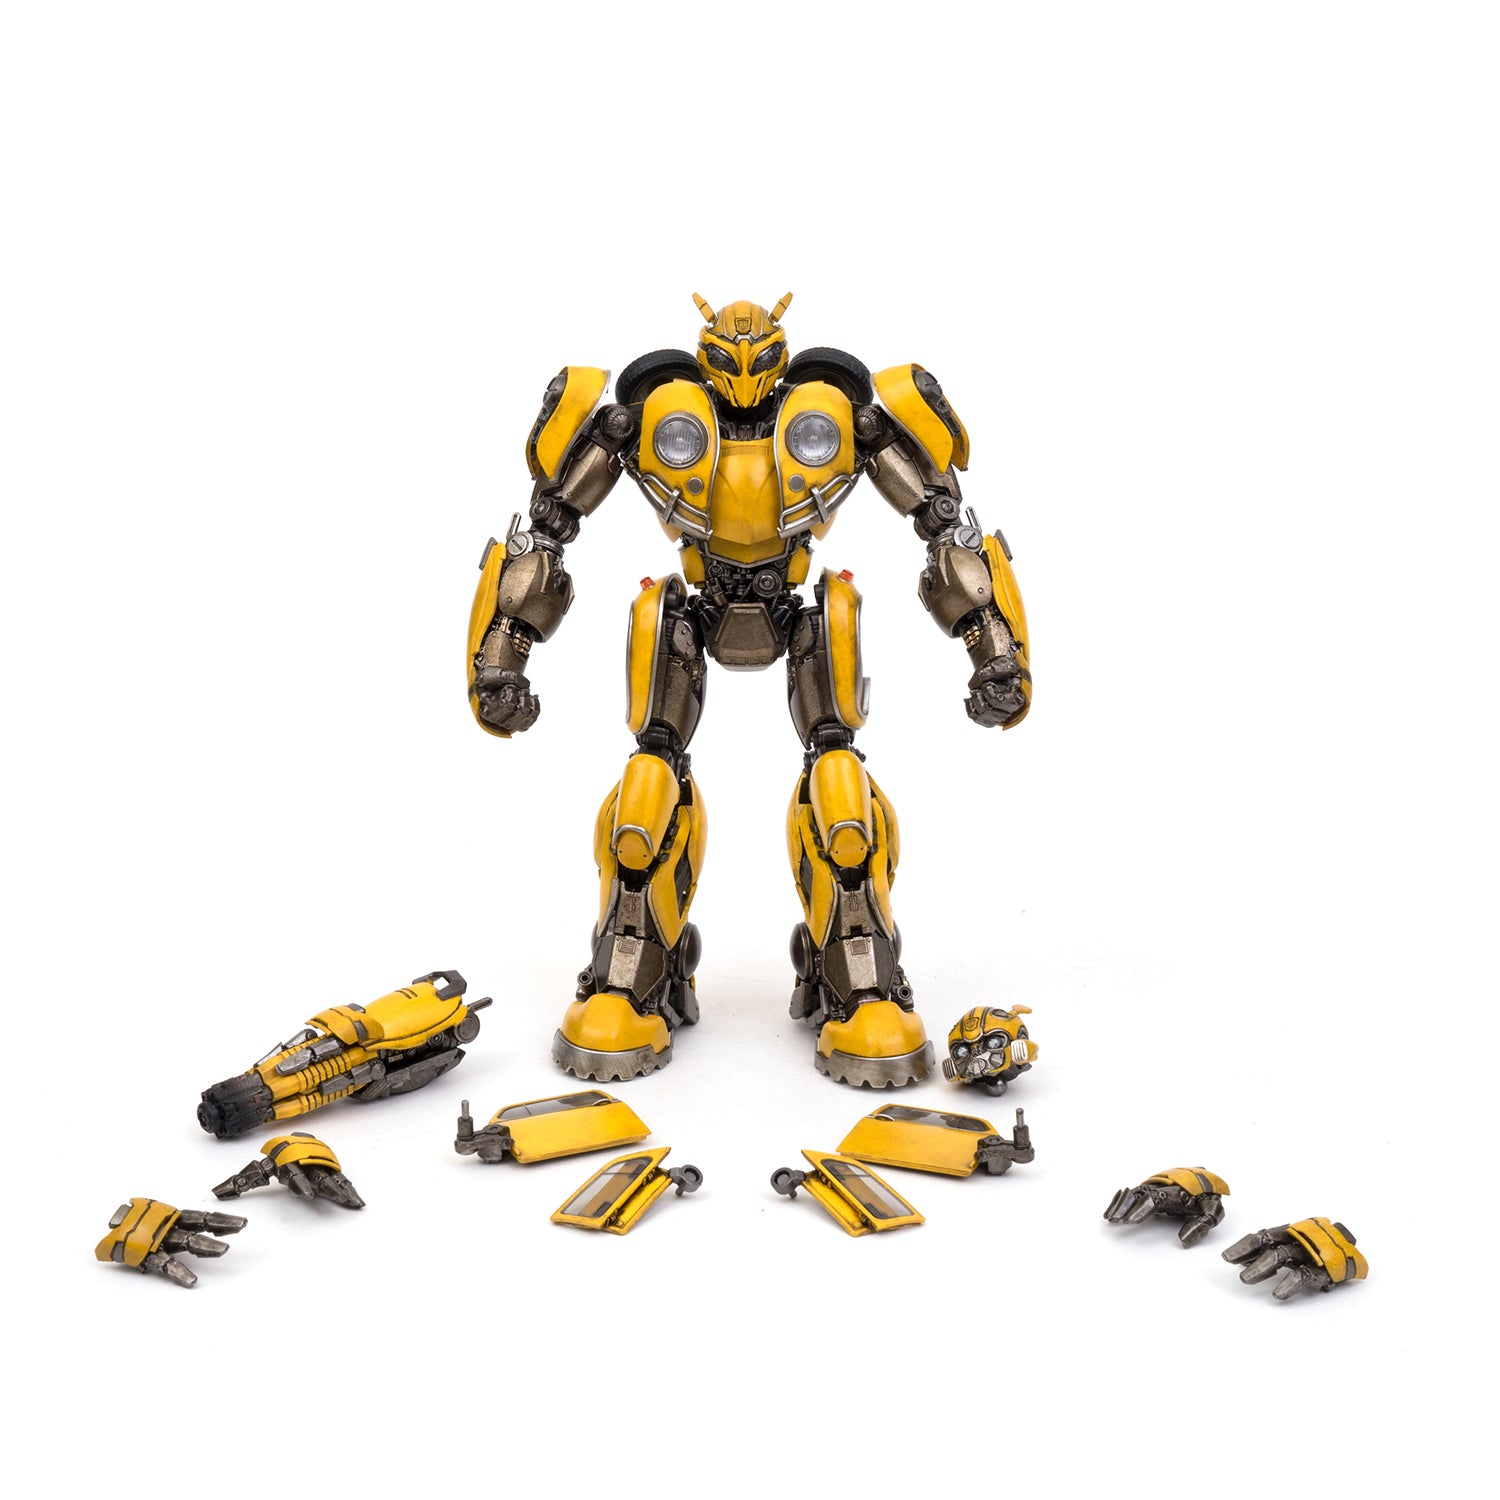 threea transformers bumblebee